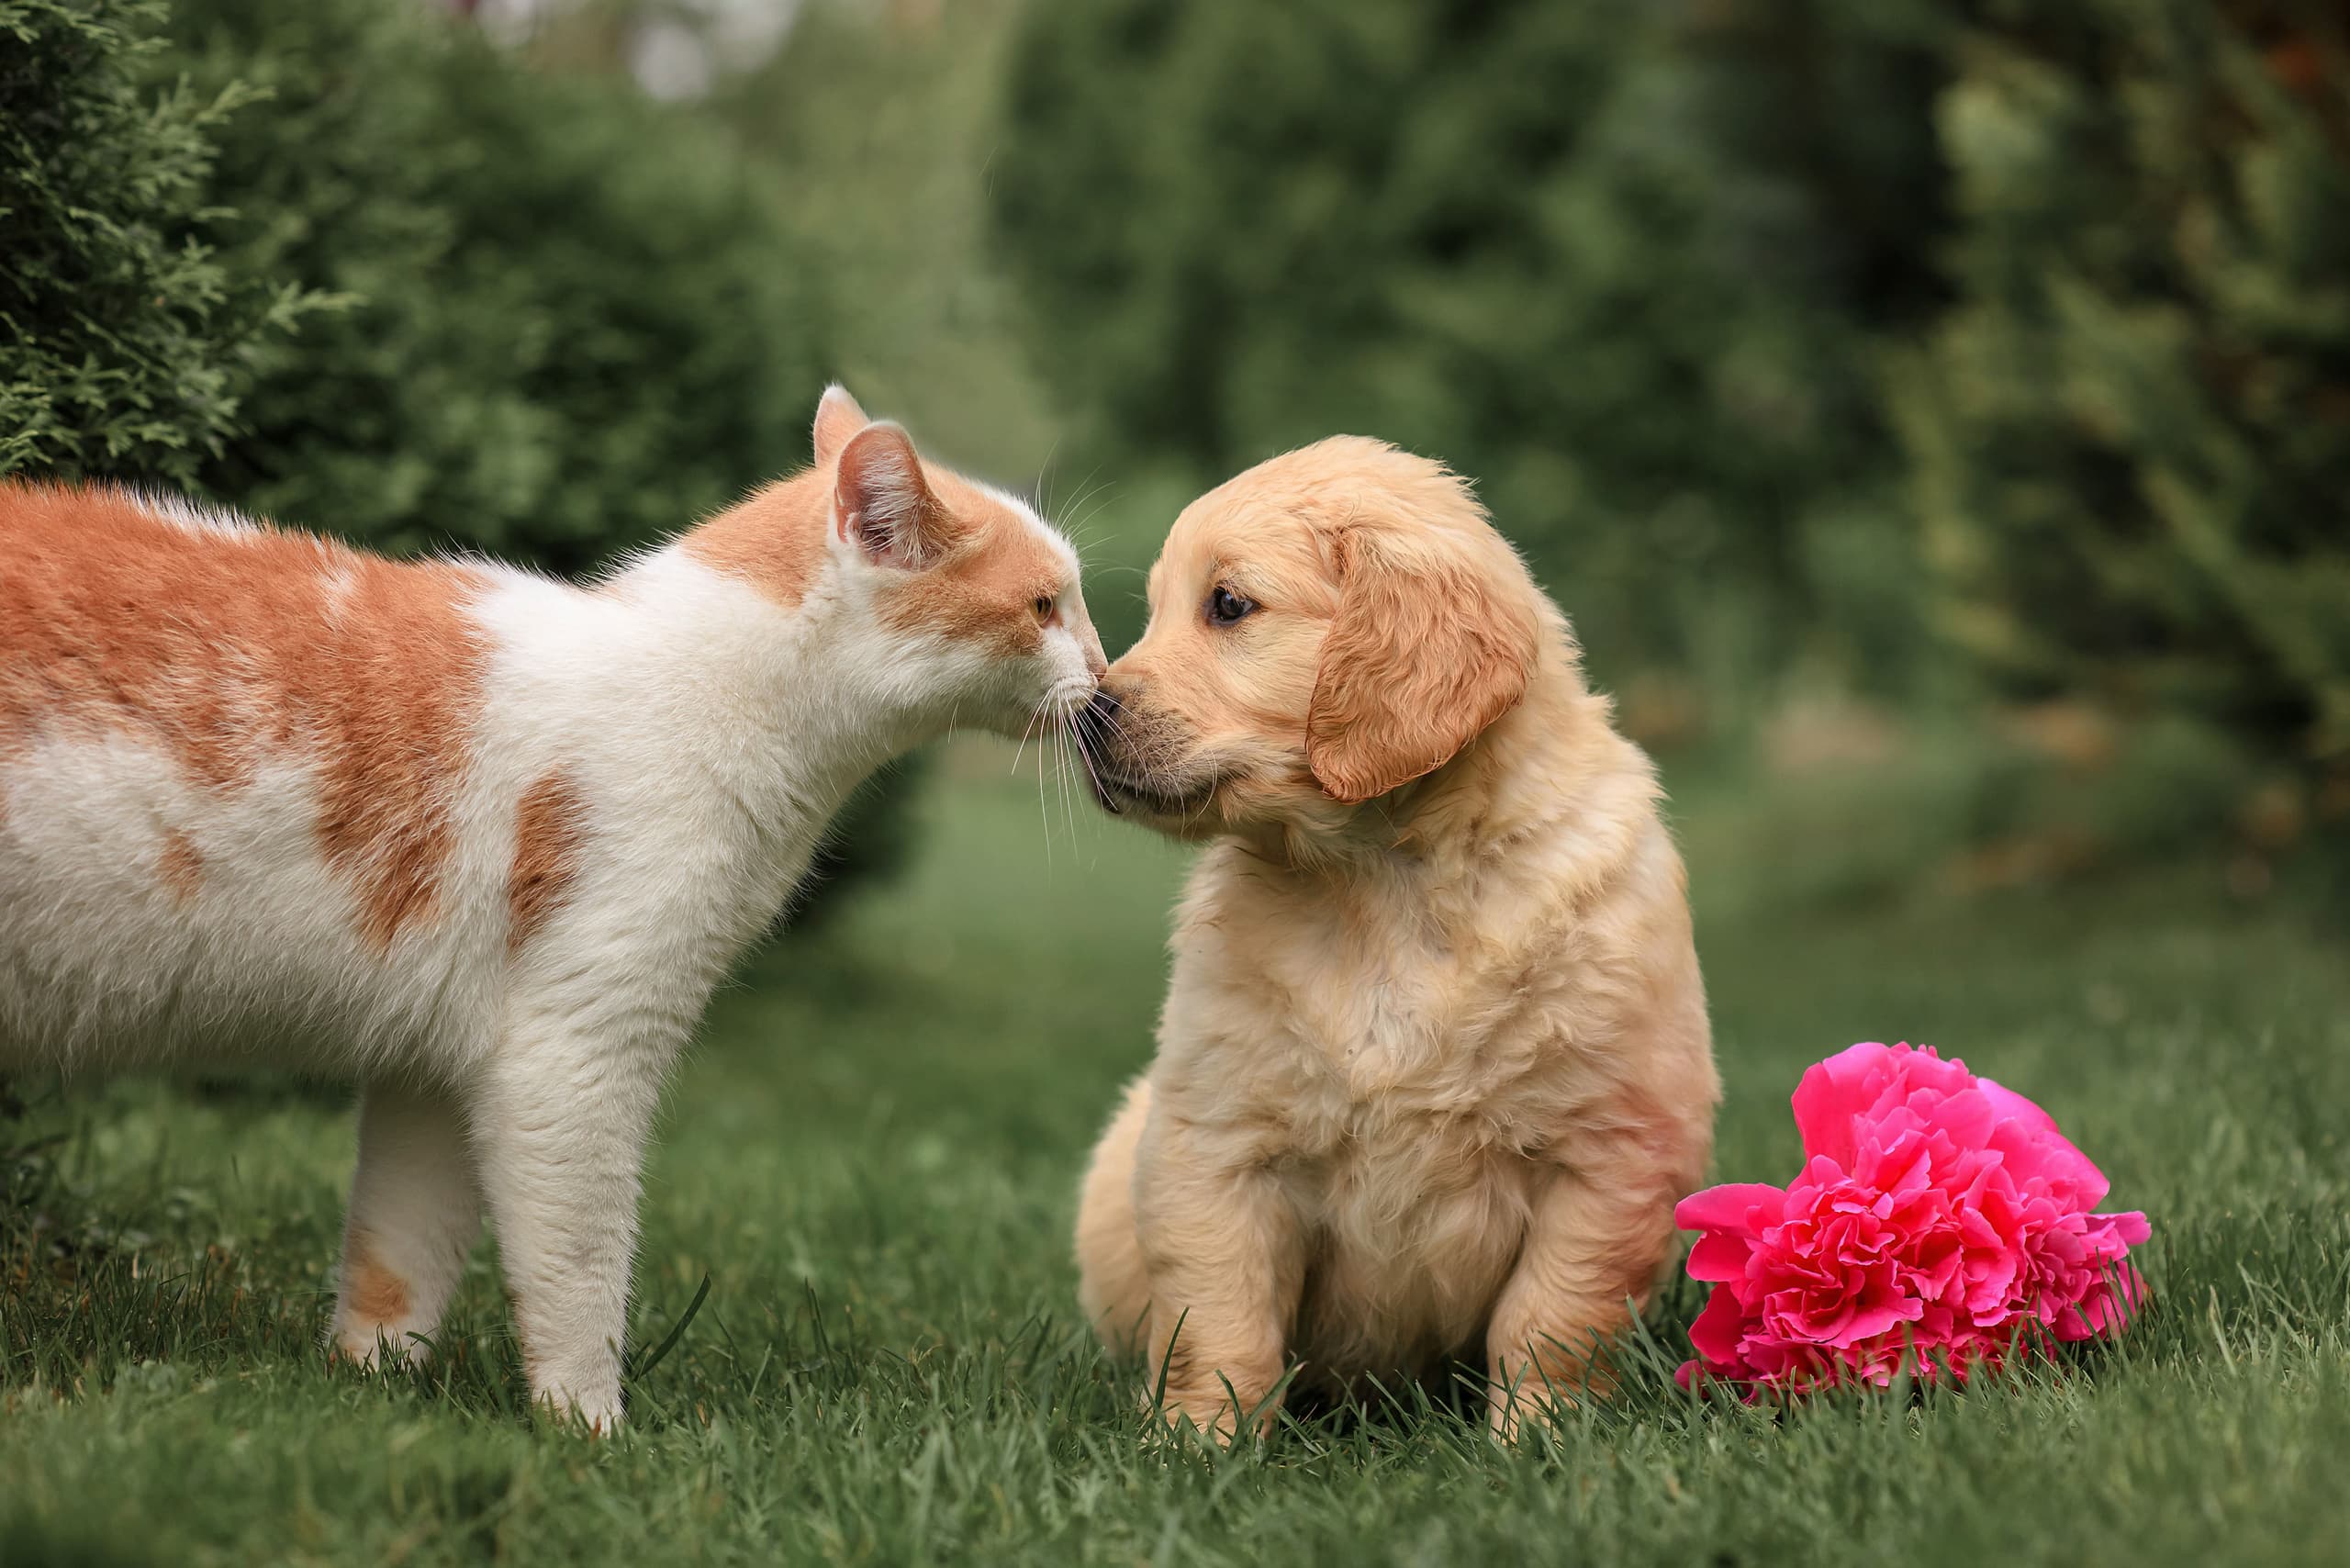 small-puppy-dog-golden-retriever-with-cat-in-the-p-2022-11-12-08-00-26-utc-min.jpg